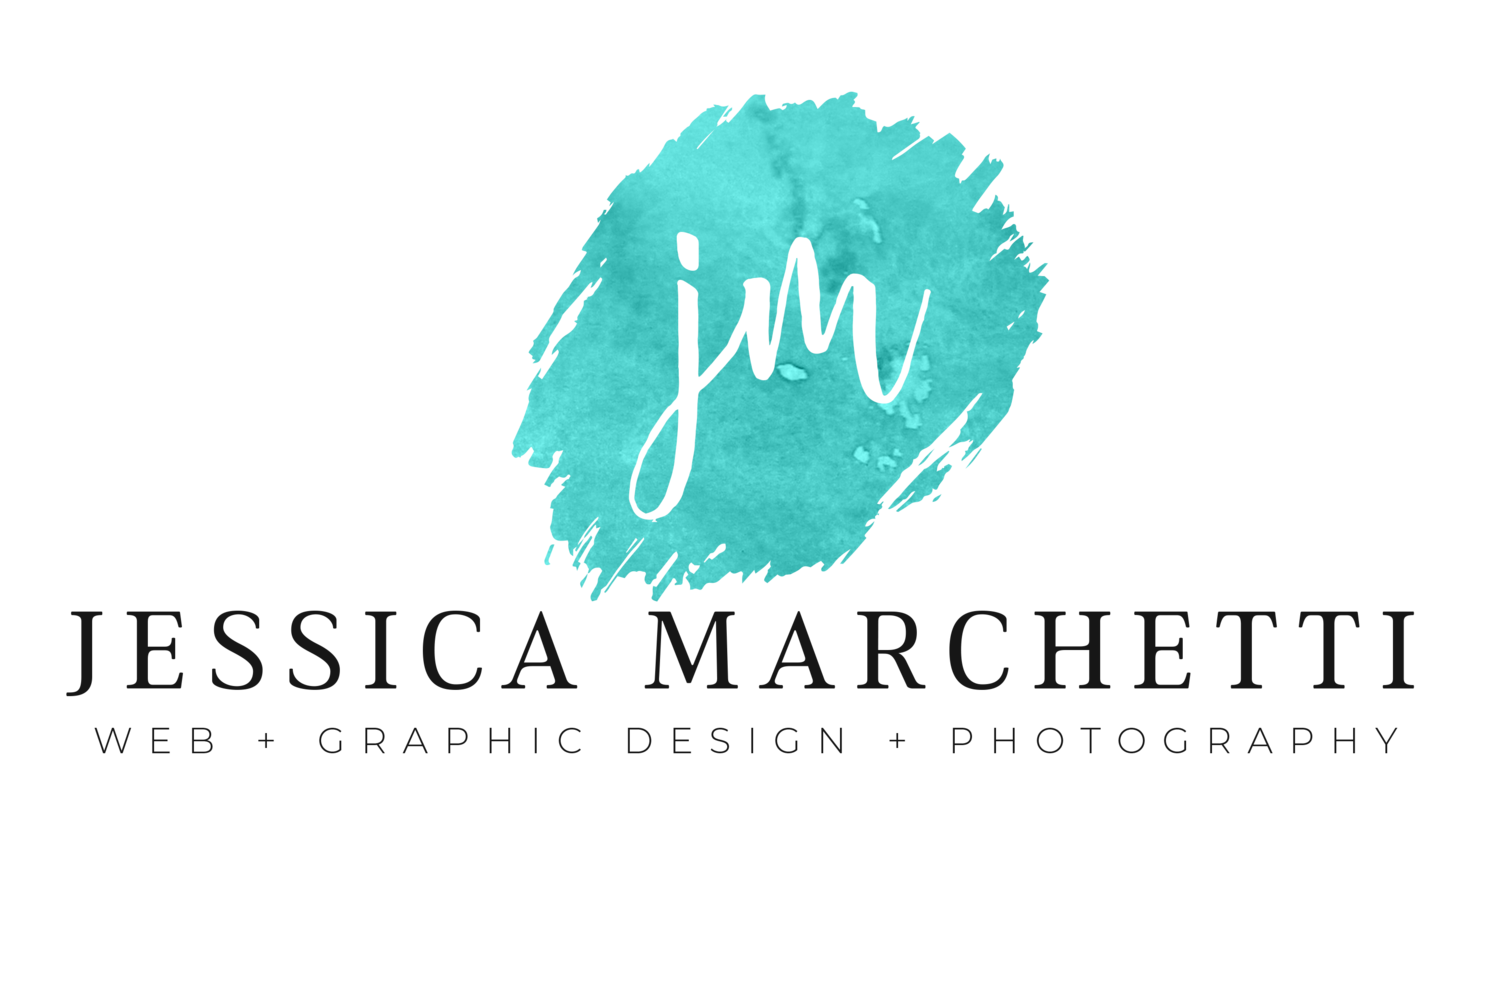 Jessica Marchetti Photography and Web Services